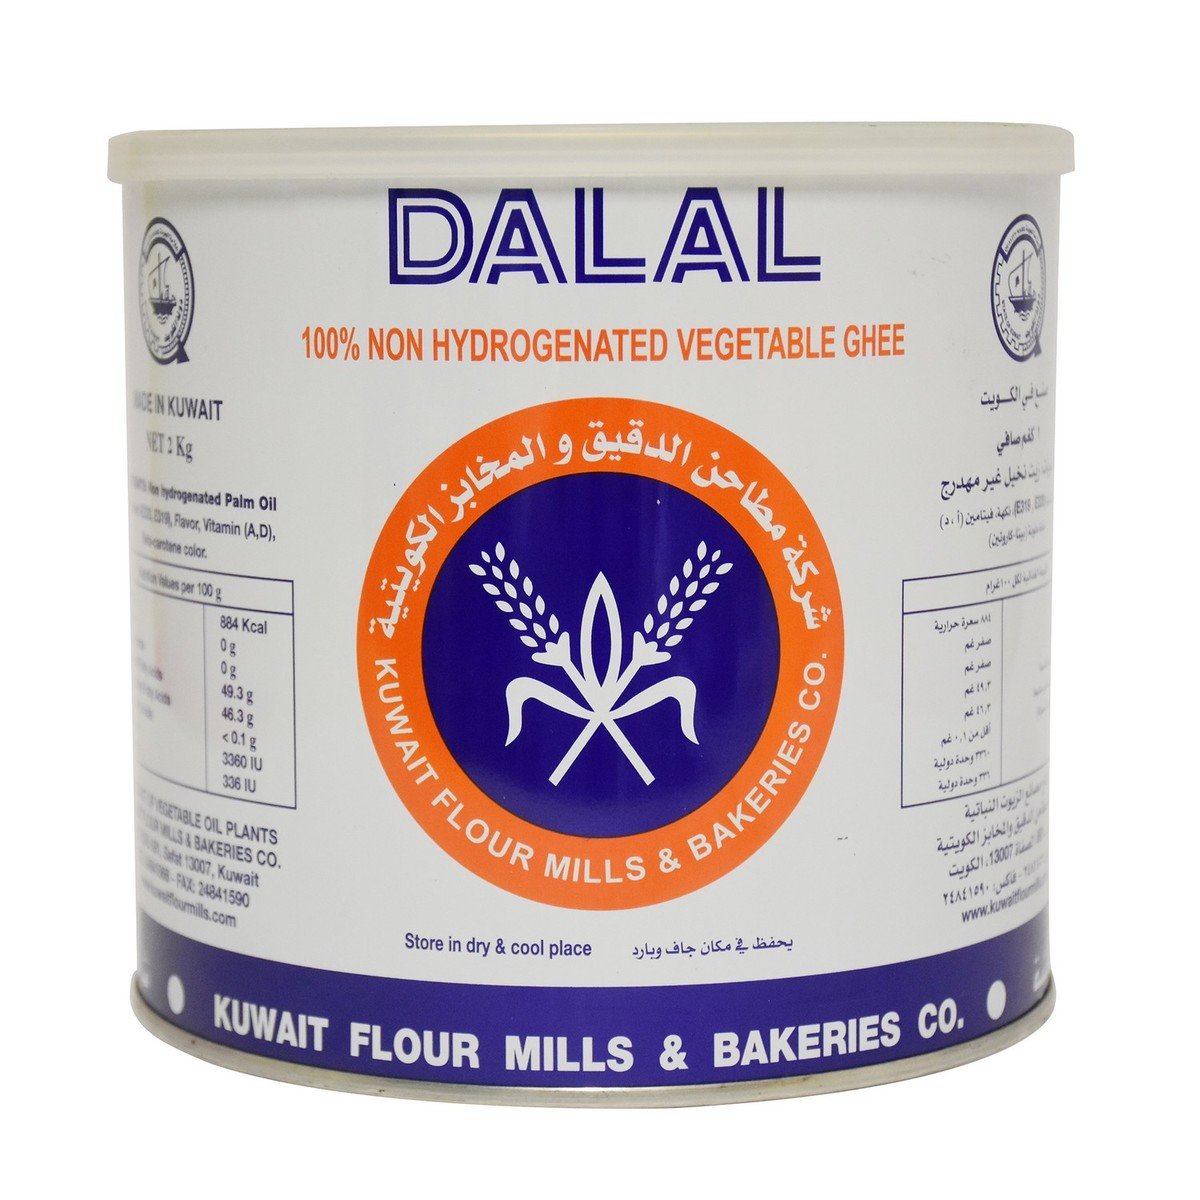 Dalal 100% Non Hydrogenated Vegetable Ghee 2 kg